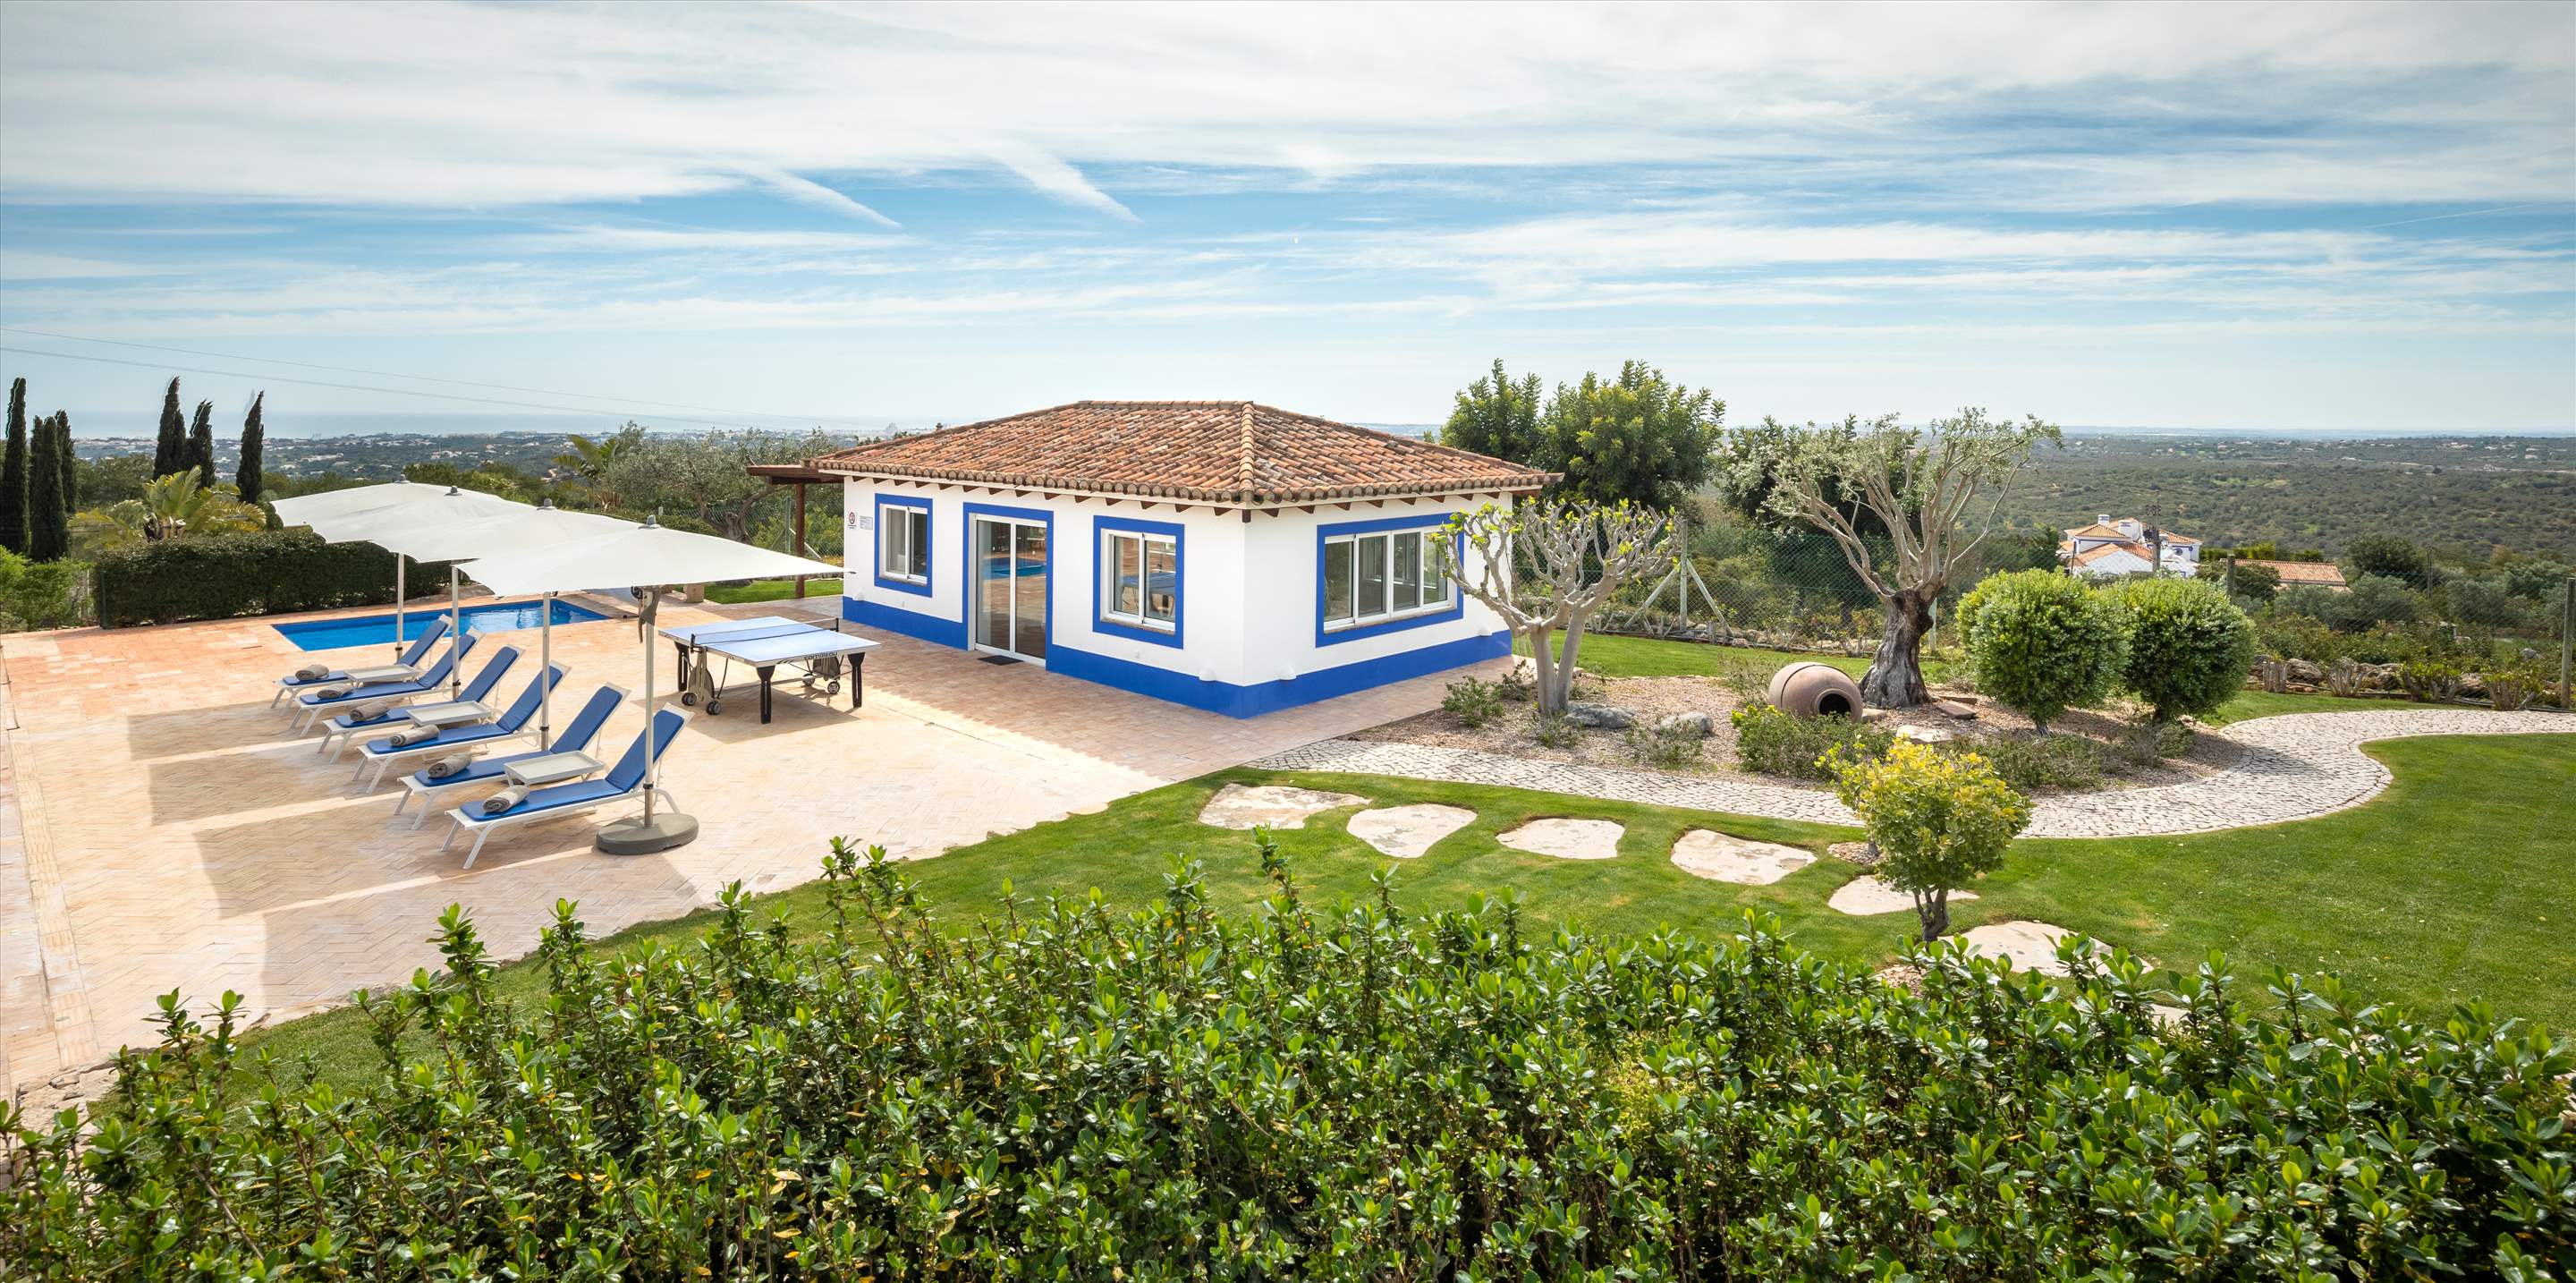 Casa da Montanha, 13-14 persons, 8 bedroom villa in Vilamoura Area, Algarve Photo #3